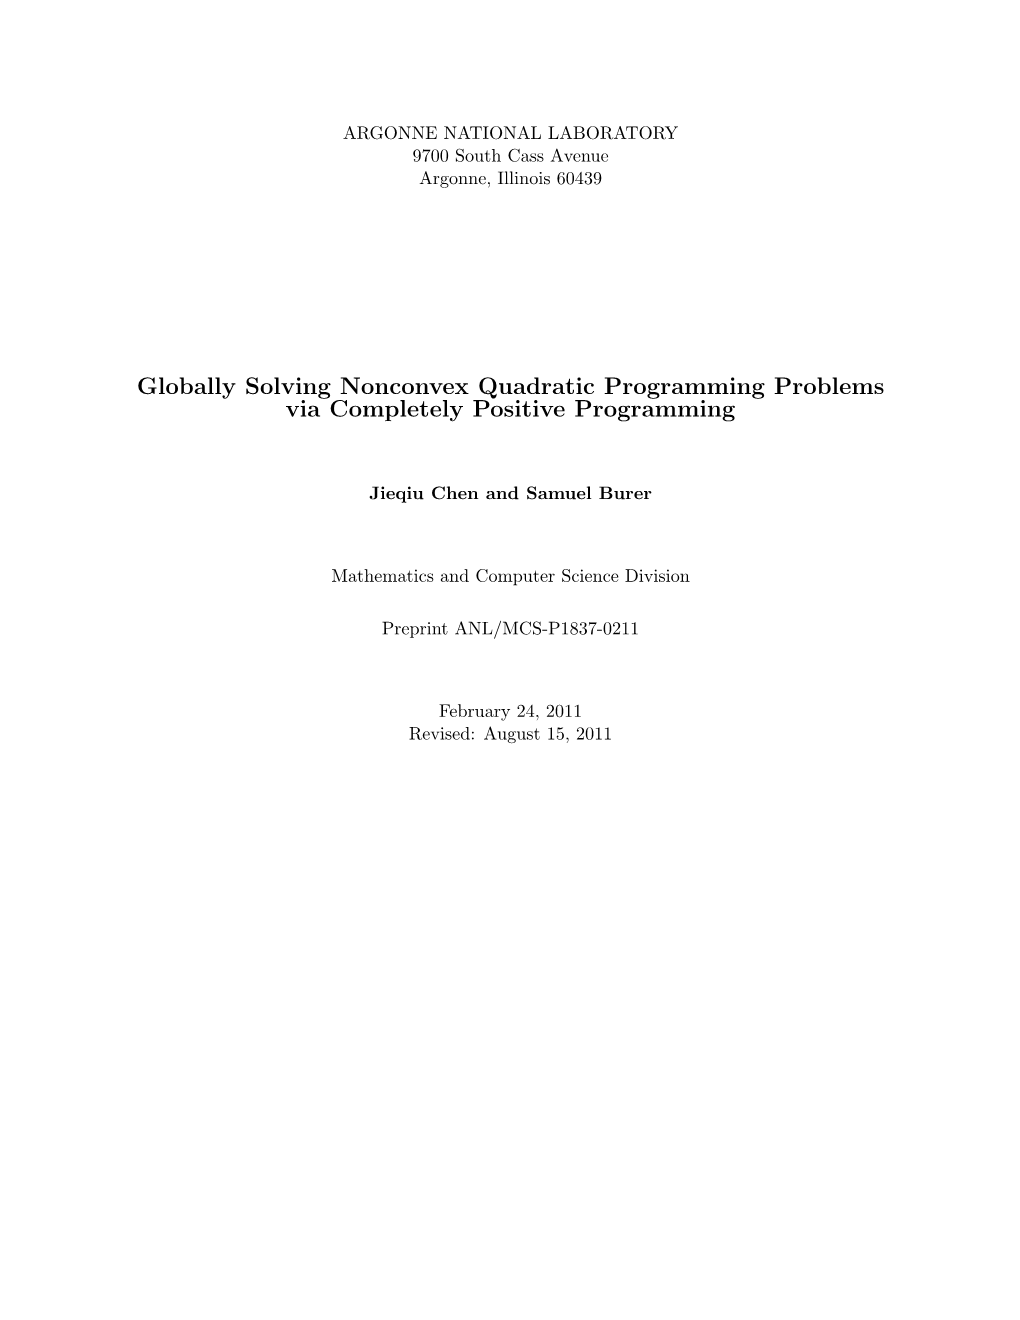 Globally Solving Nonconvex Quadratic Programming Problems Via Completely Positive Programming